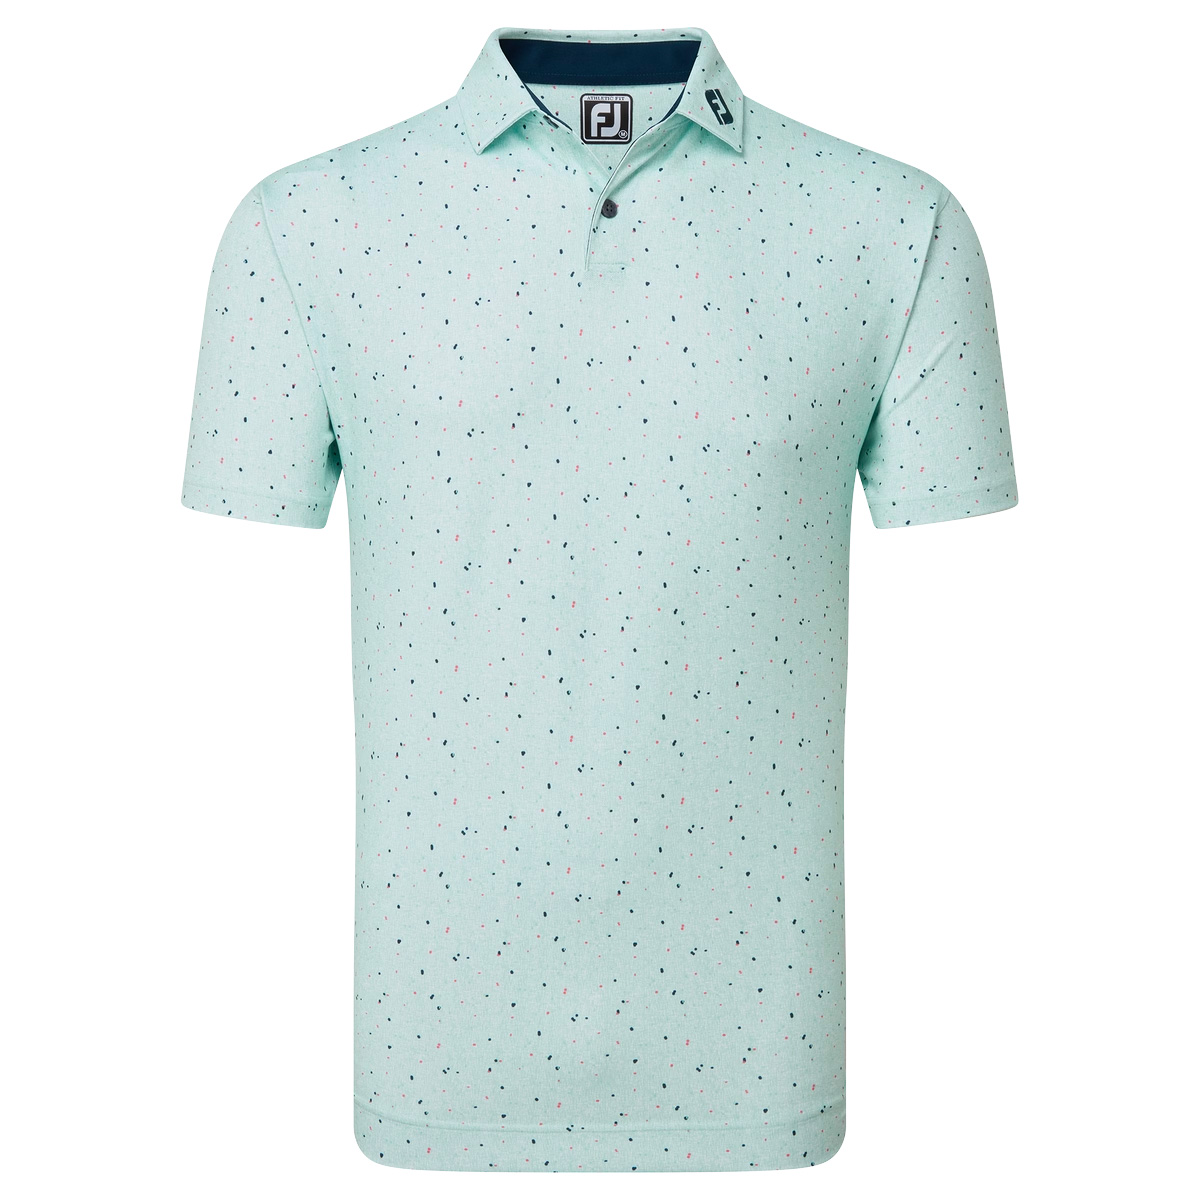 FootJoy EU Tweed Texture Mens Golf Polo Shirt  - Sea Glass